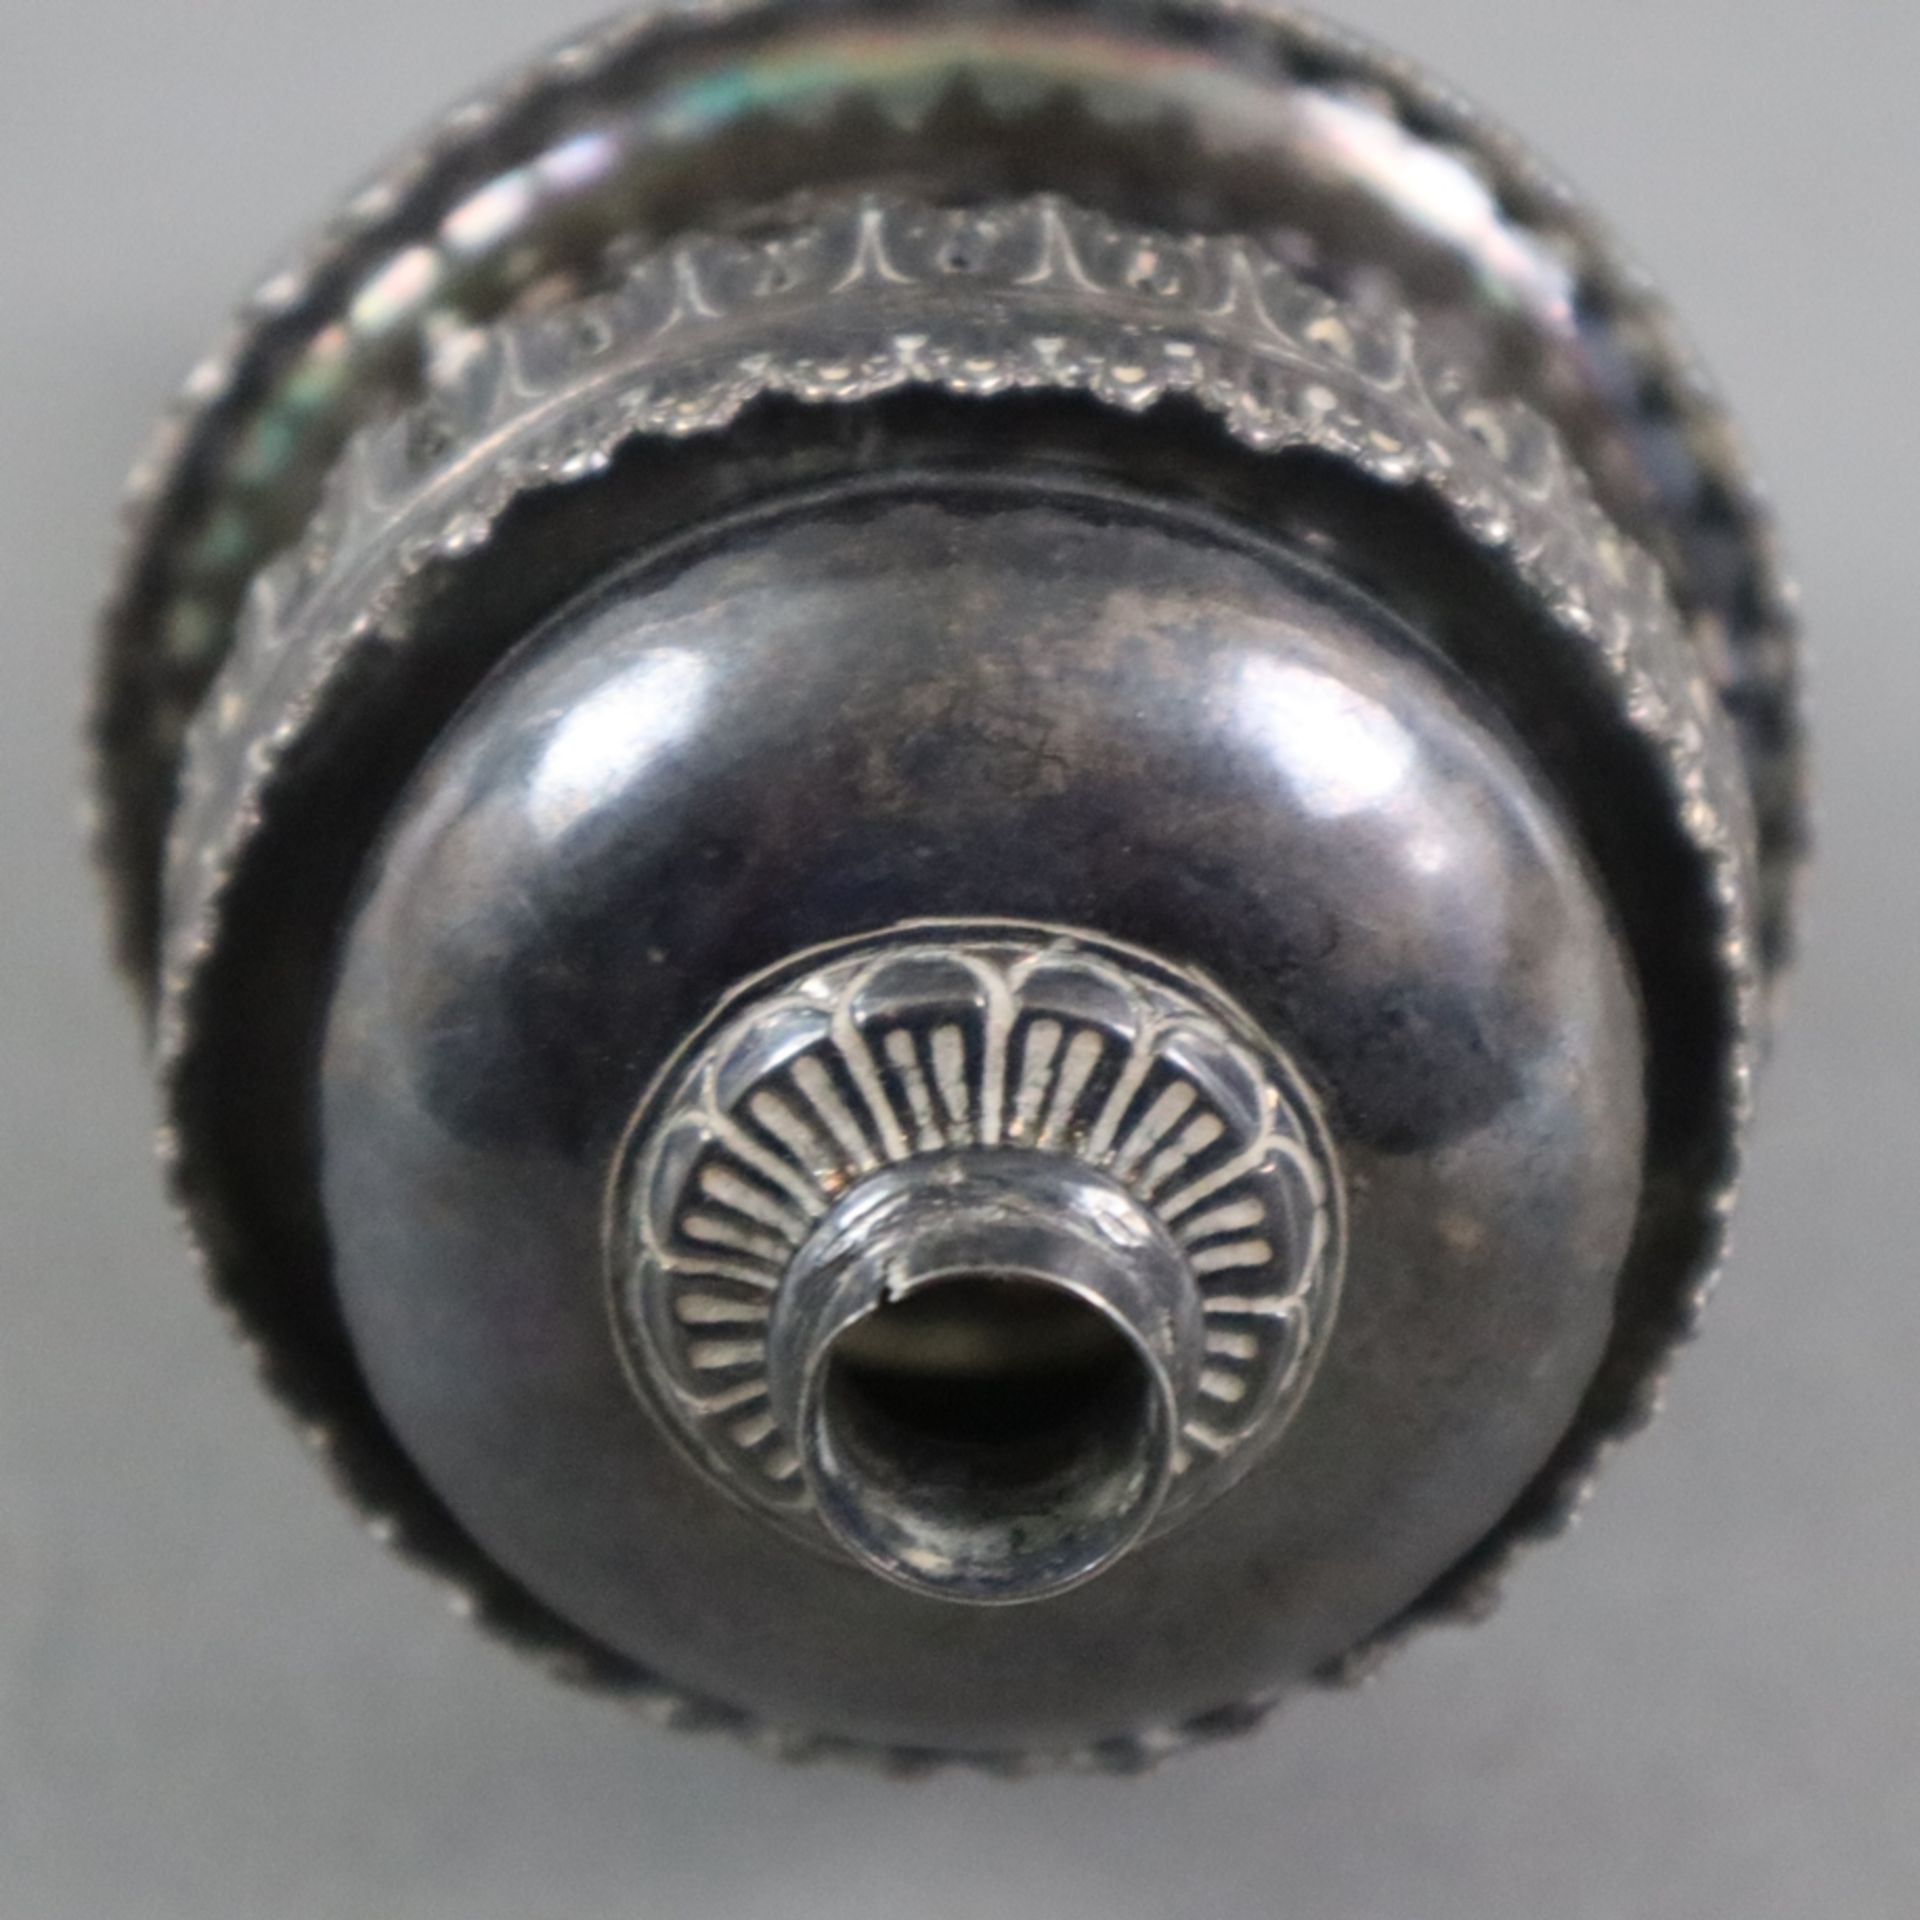 Weihrauchgefäß - 19. Jh., Metall, versilbert, durchbrochen gearbeiteter Reliefdekor, runde Medaillo - Image 8 of 8